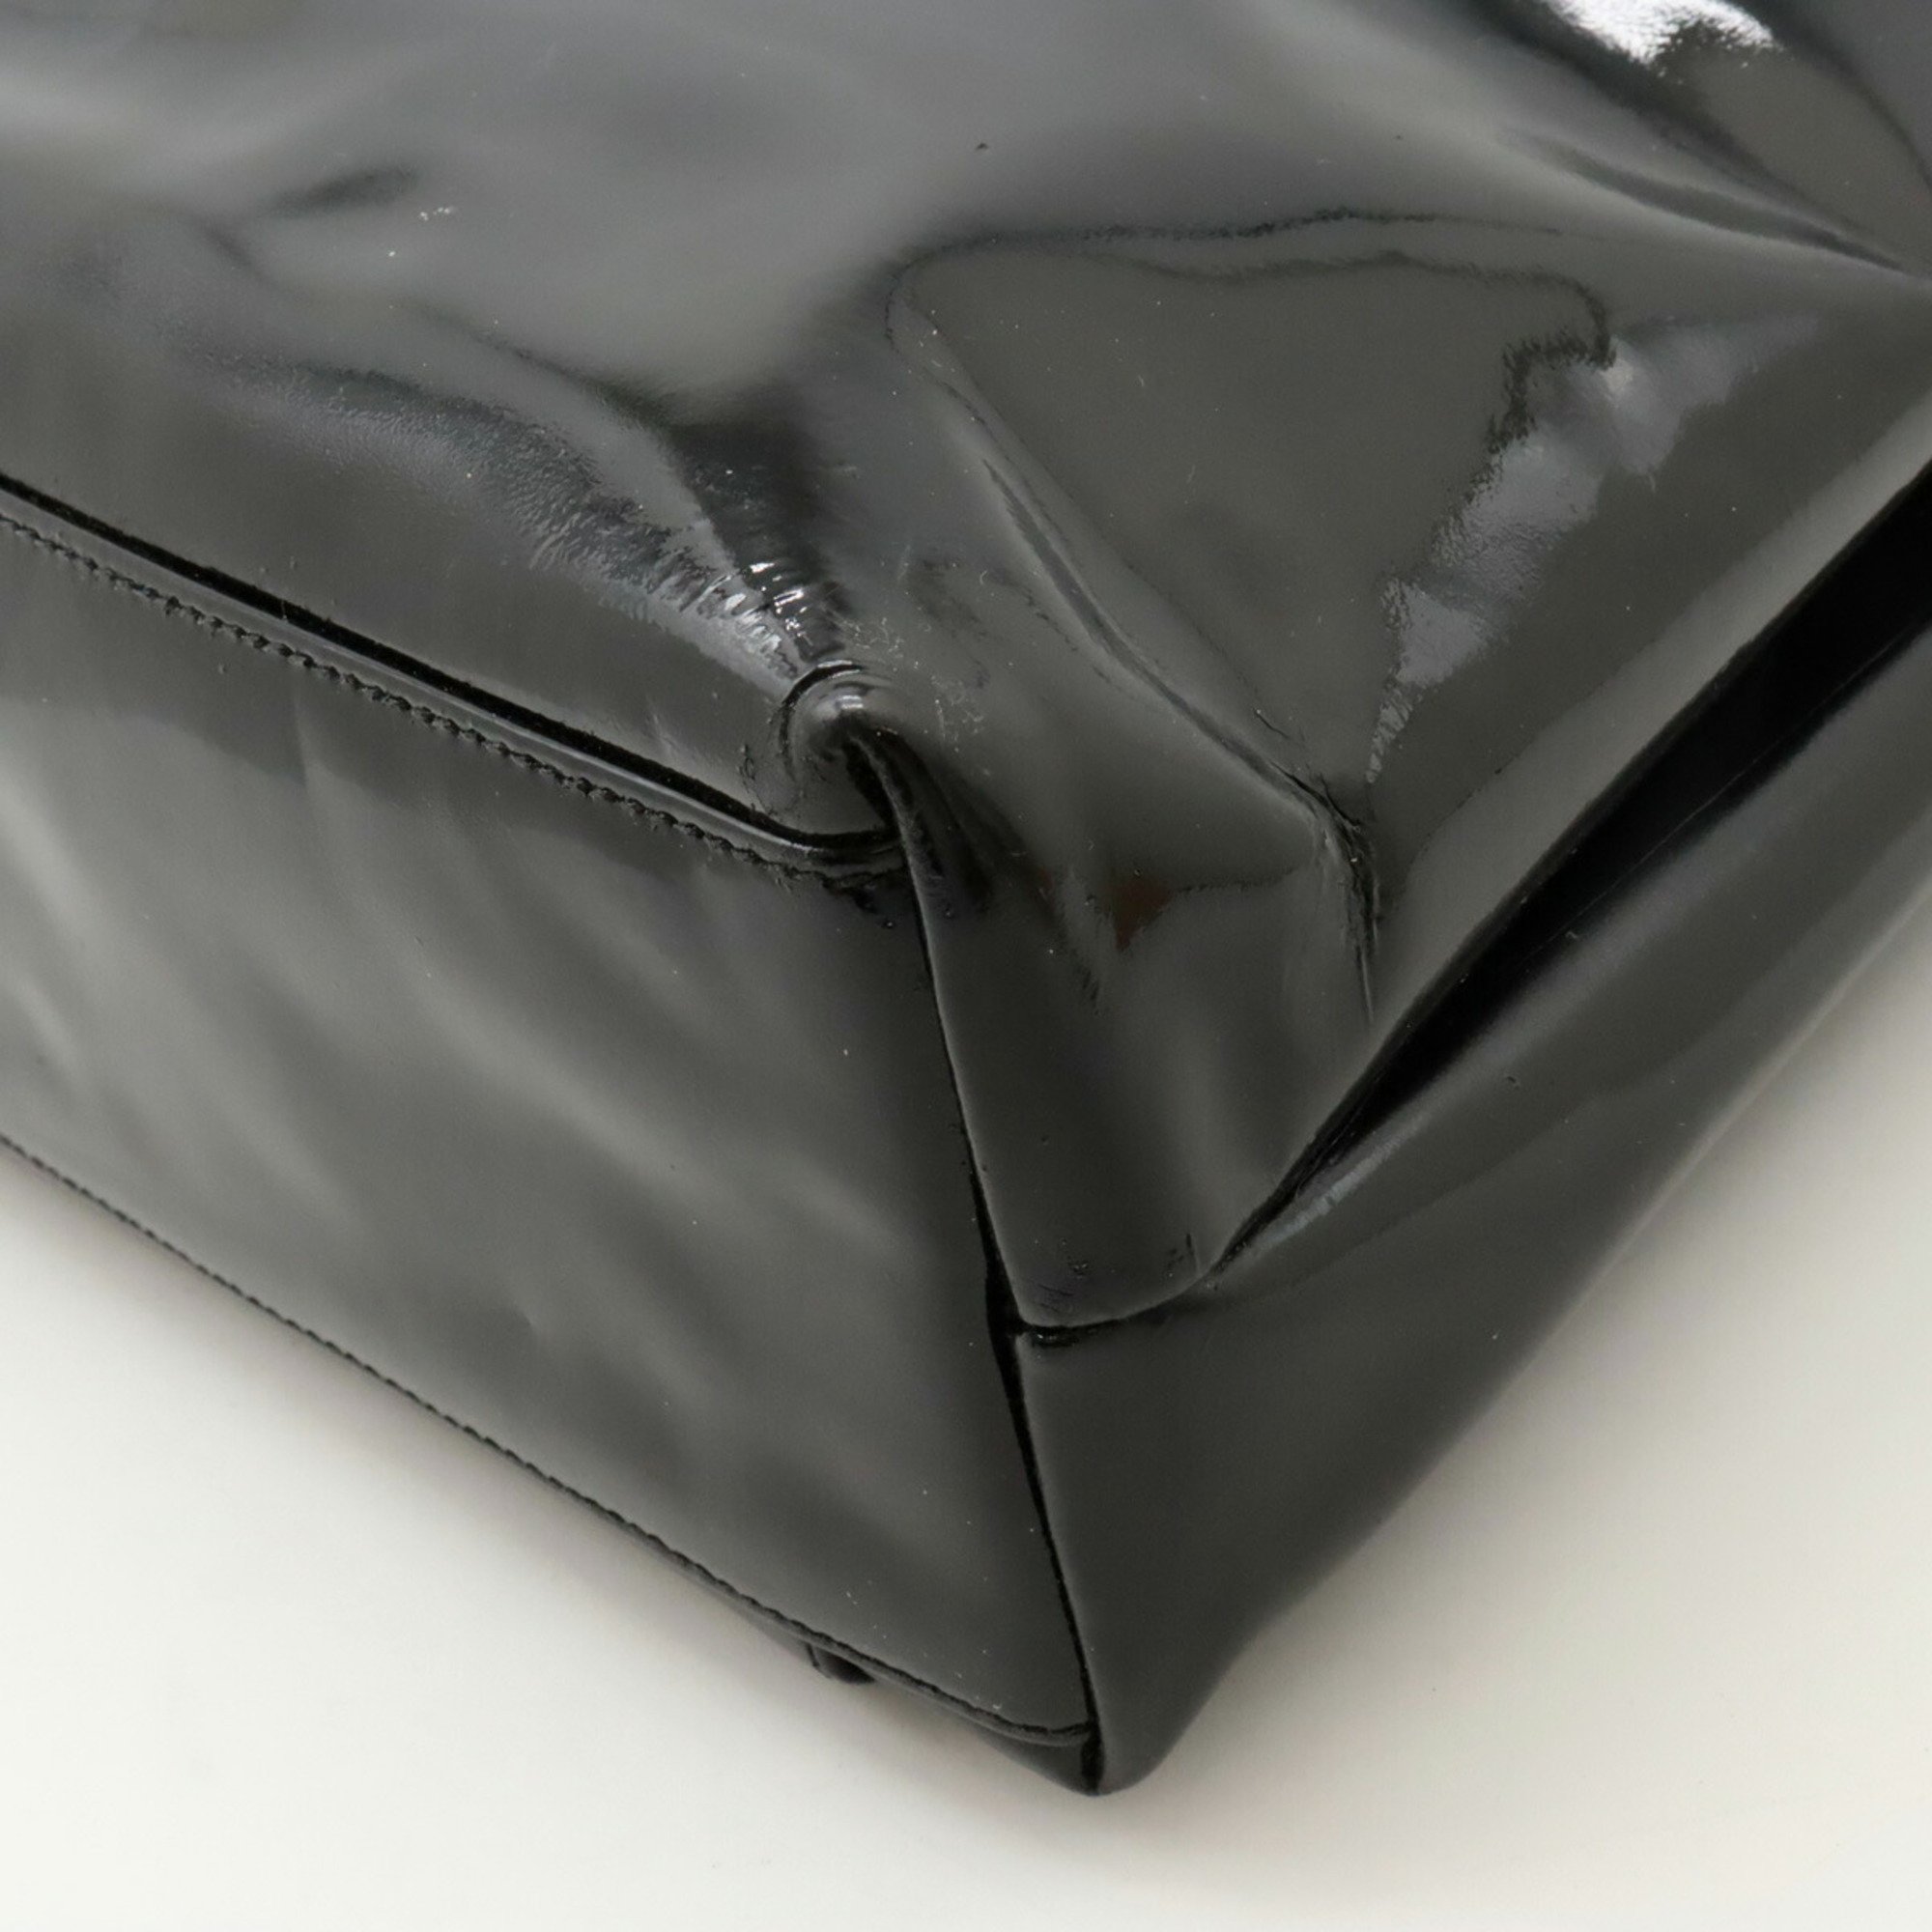 CHANEL Coco Mark Chain Shoulder Bag Enamel Leather Black A05572